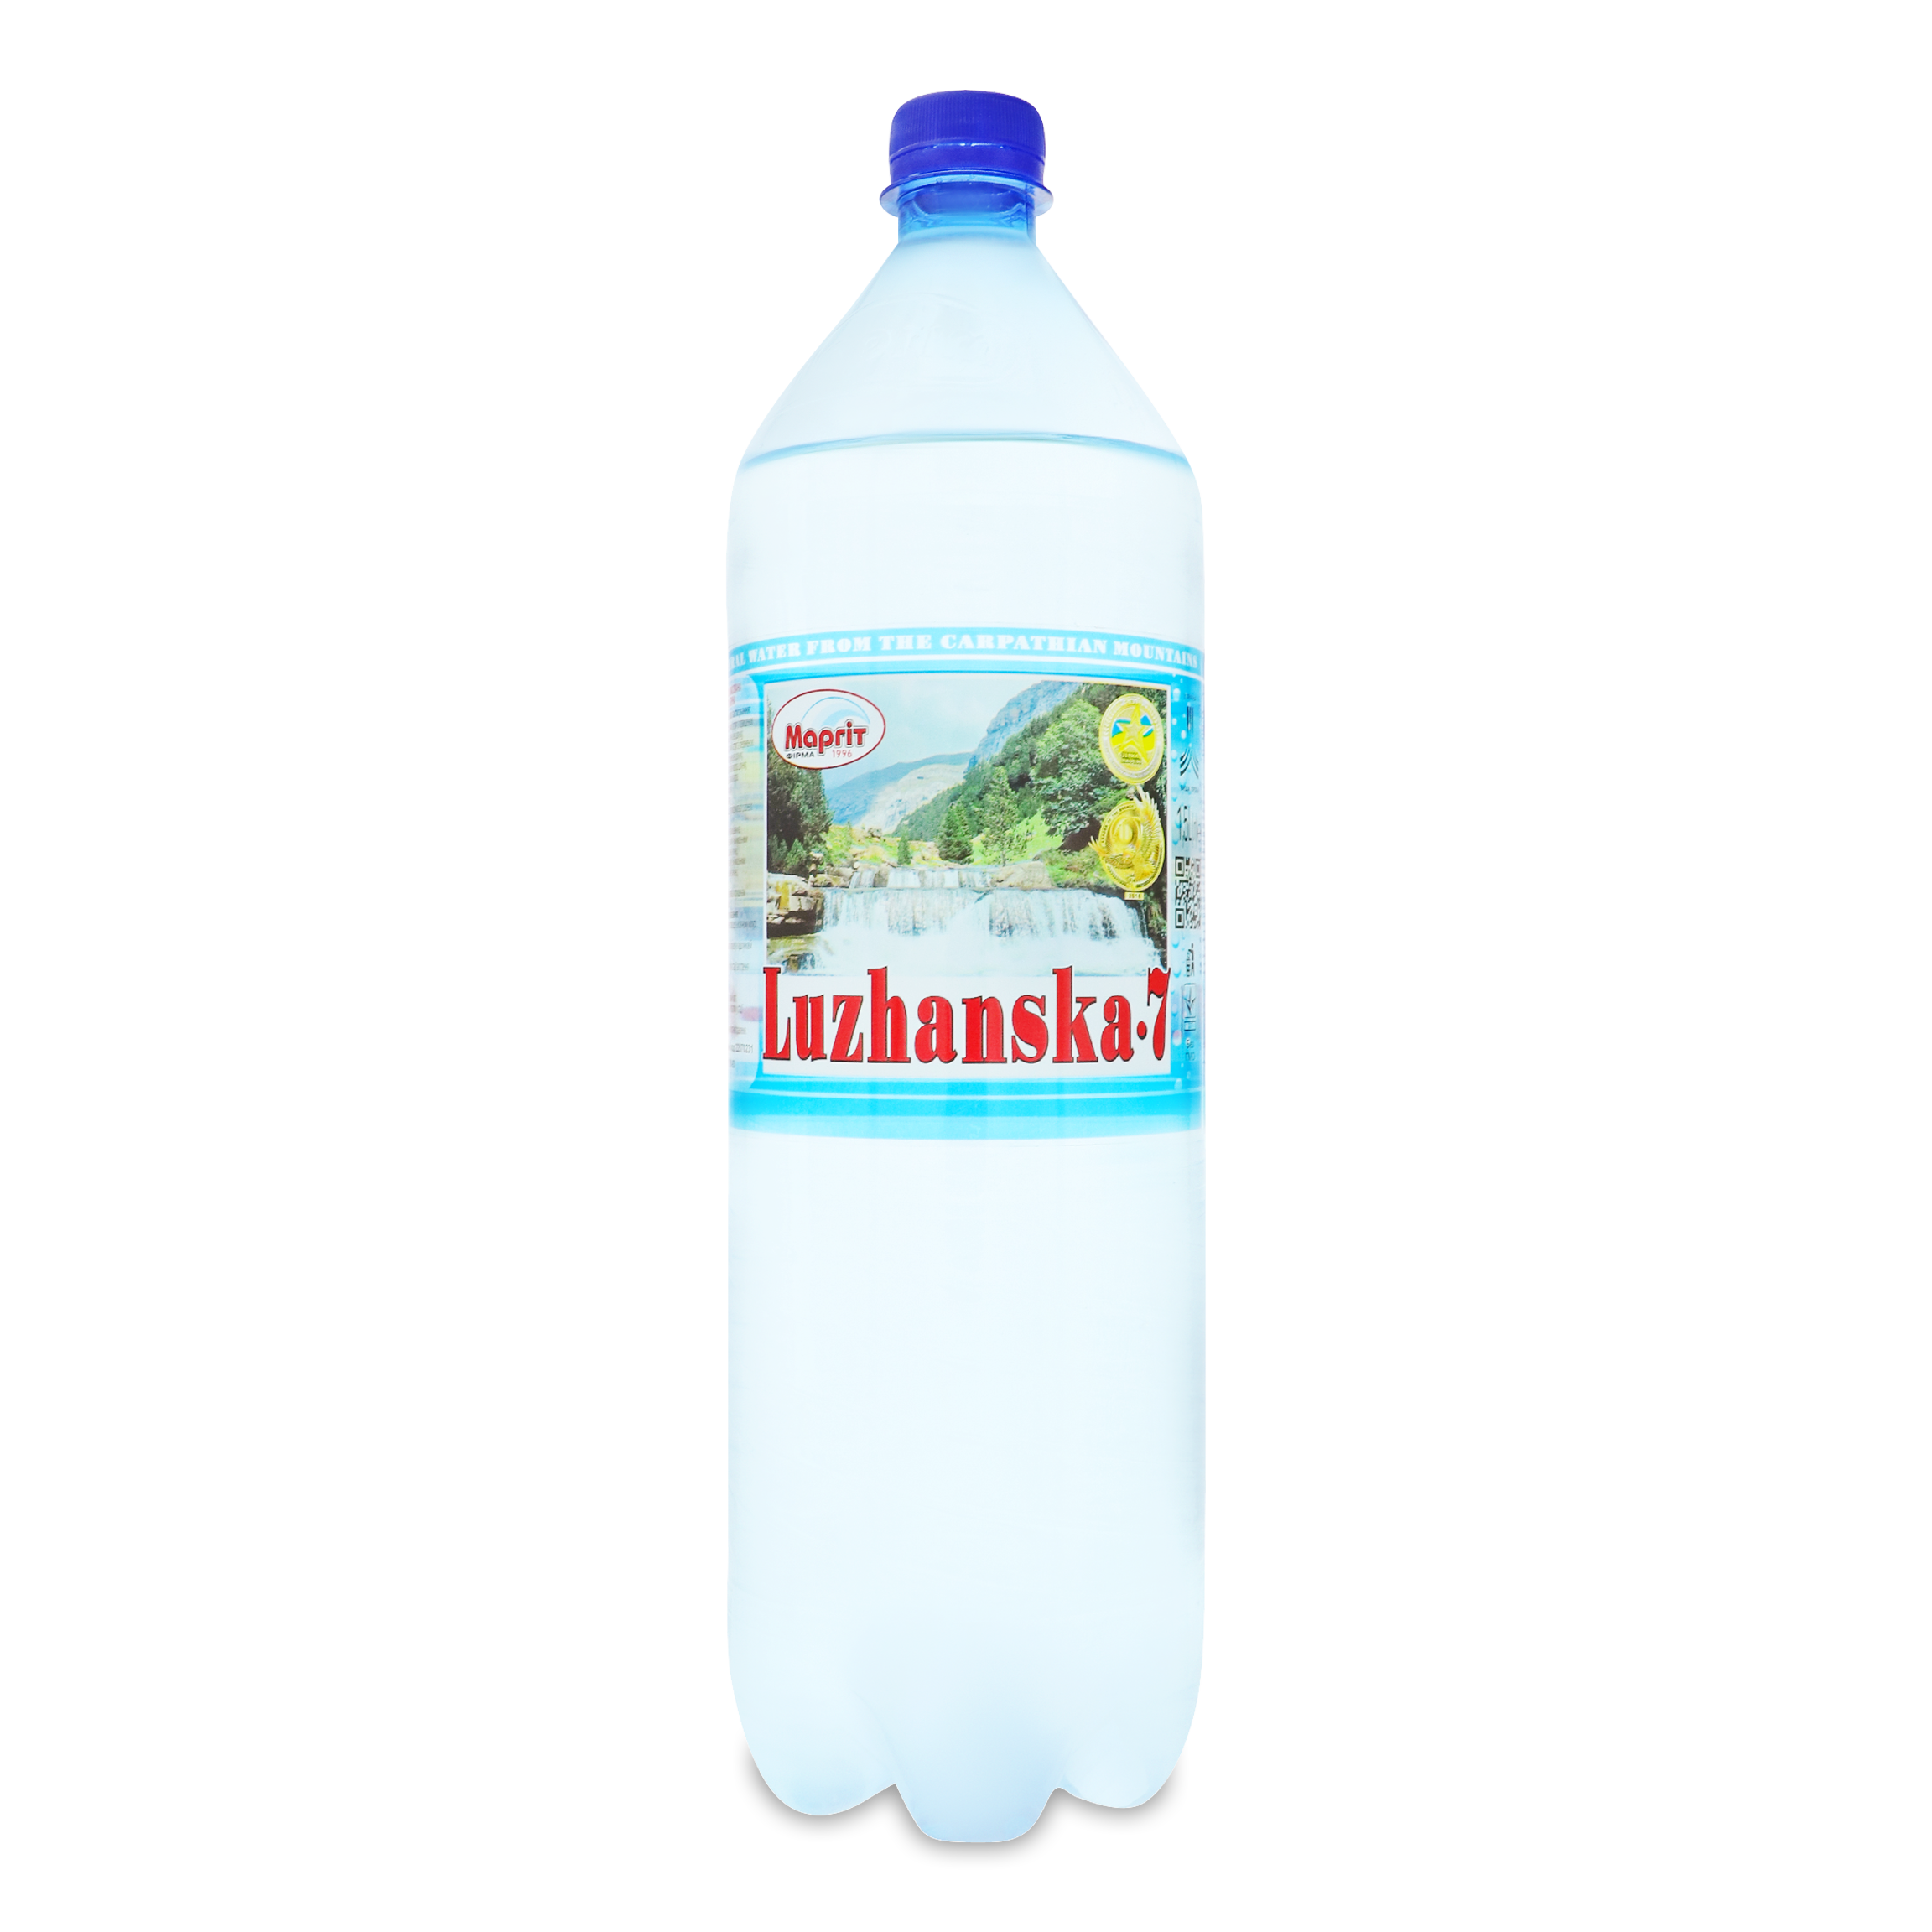 Sparkling mineral water Luzhanska №7 1,5l